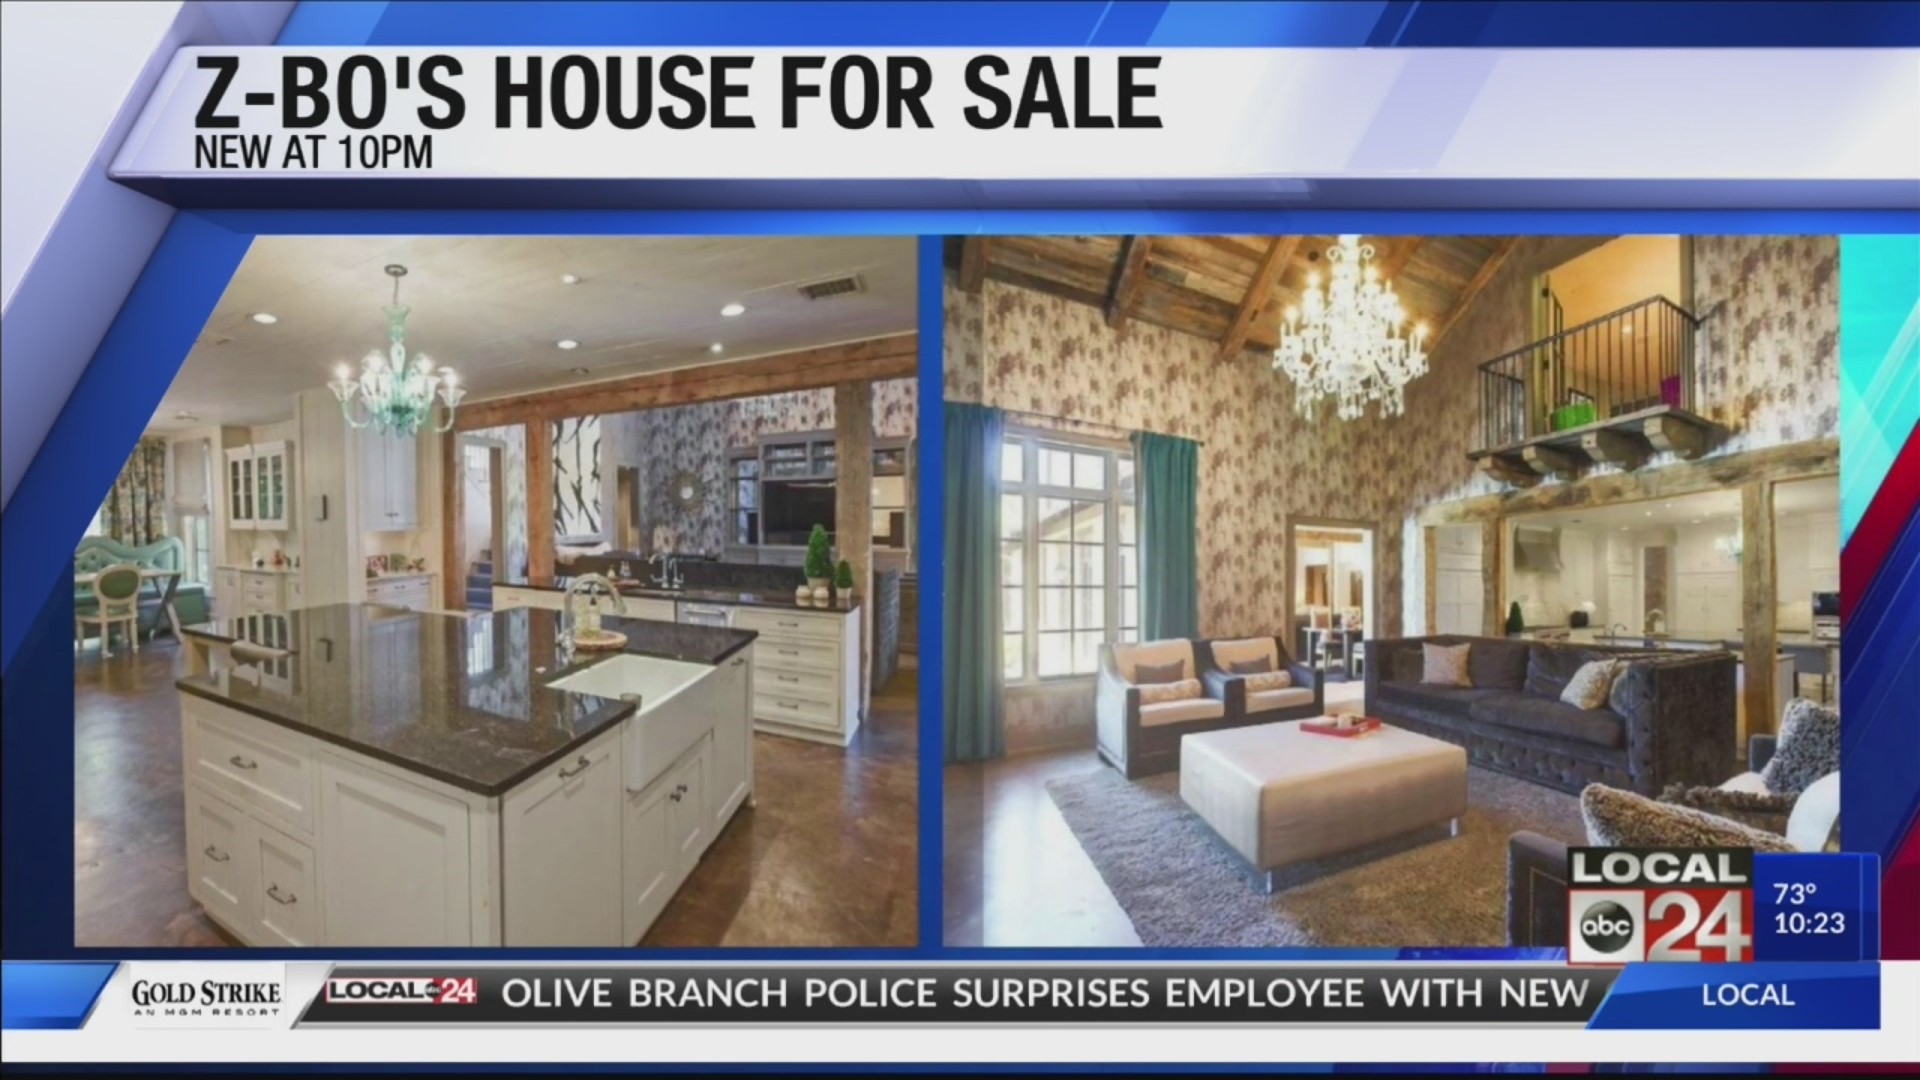 Former Memphis Grizzlies star Zach Randolph puts his East Memphis home for sale